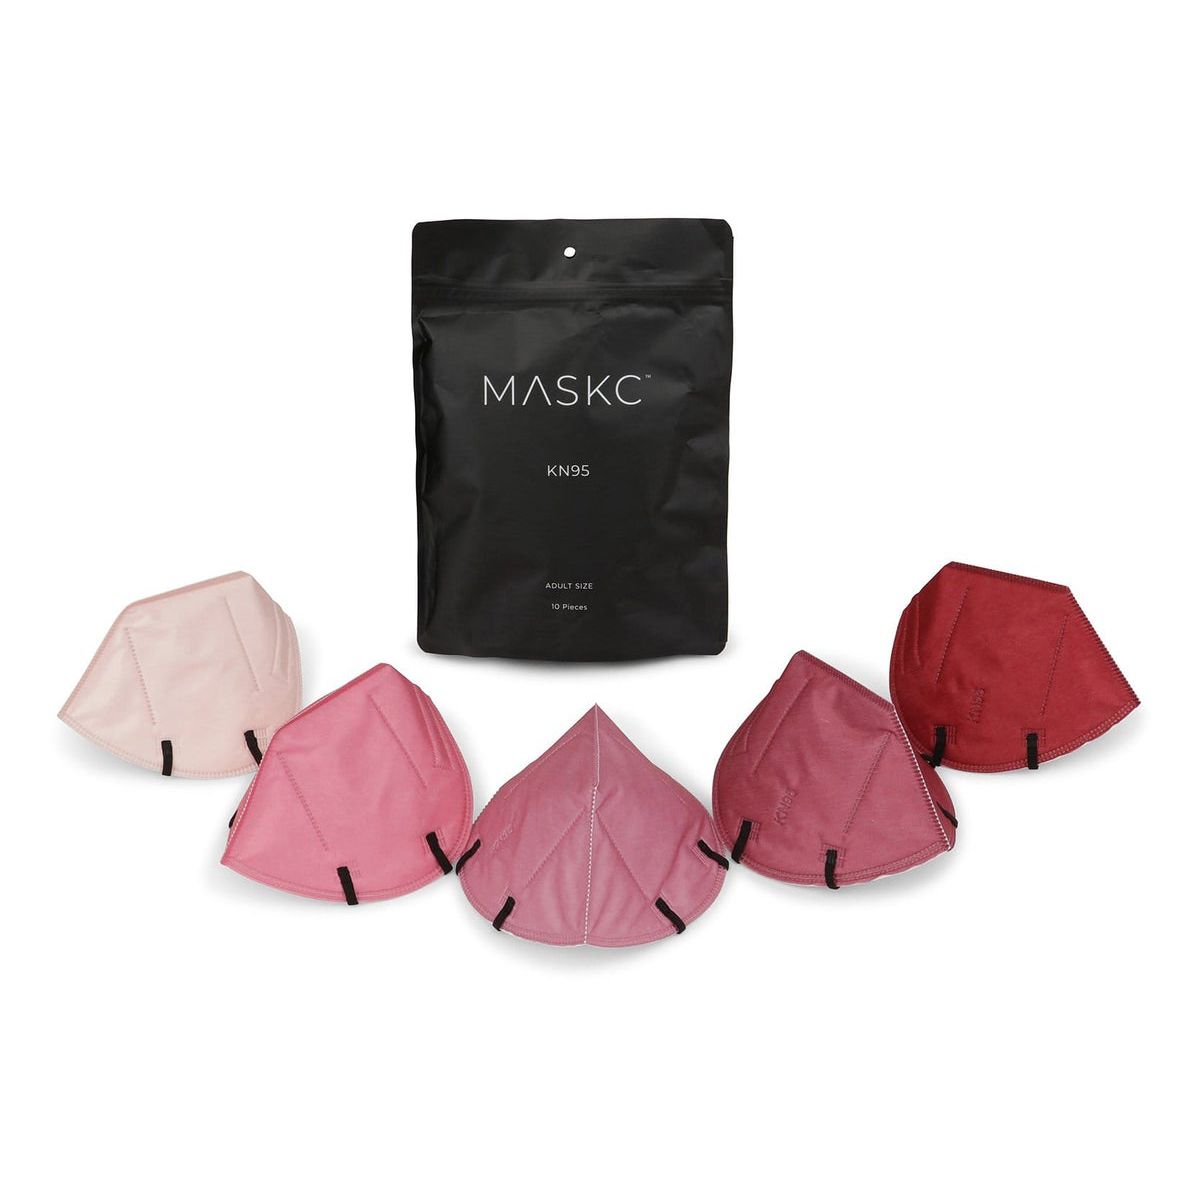 maskc kn95 mask in blush variety pack